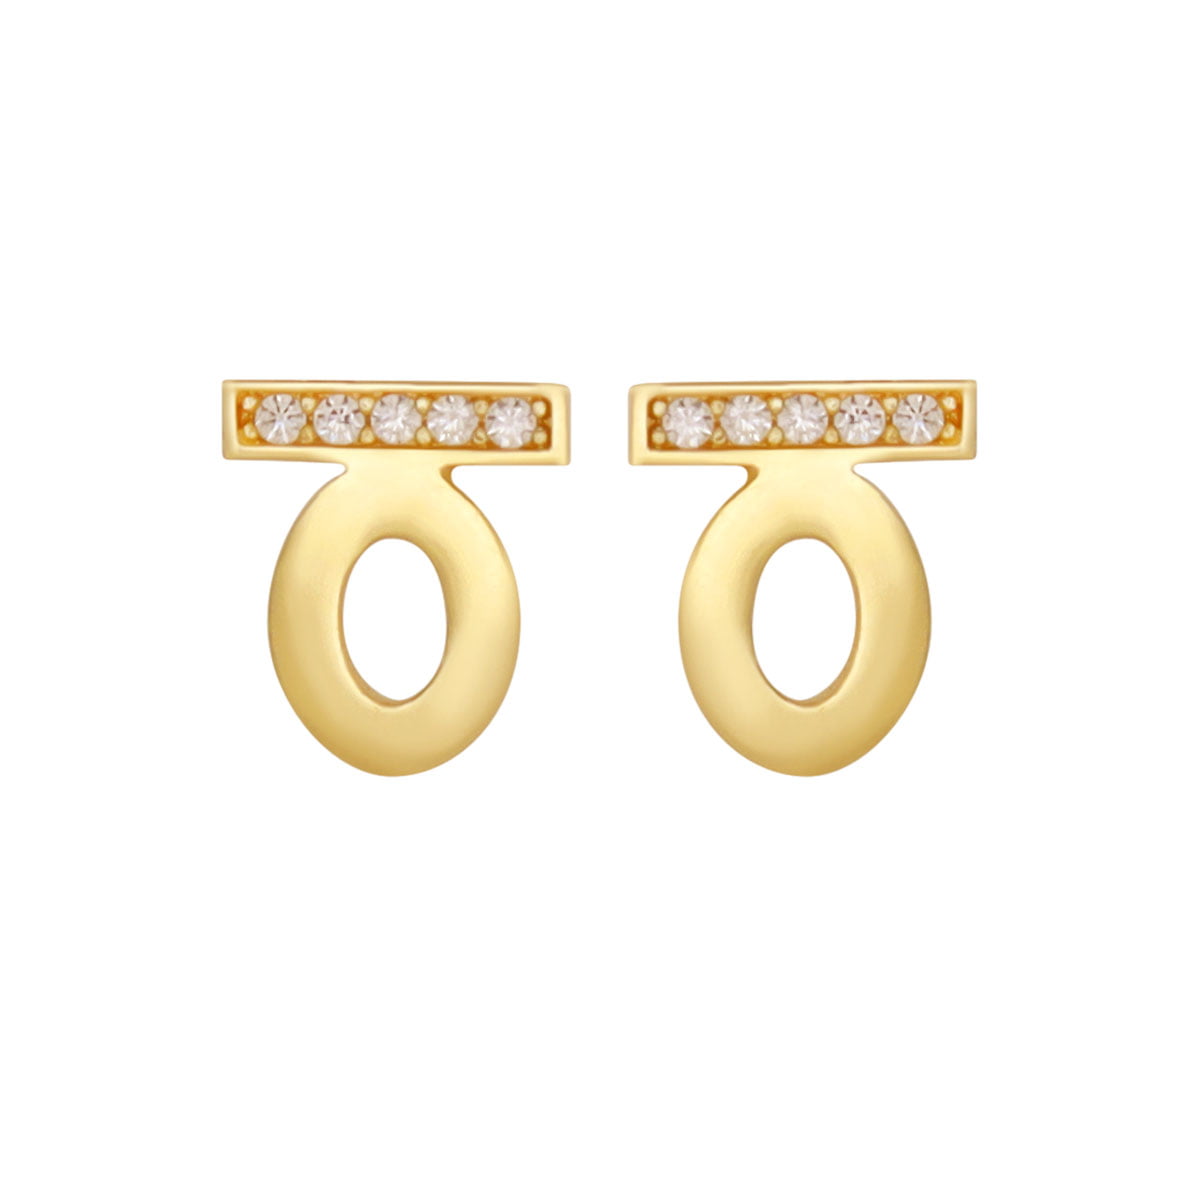 18ct yellow gold stud earrings